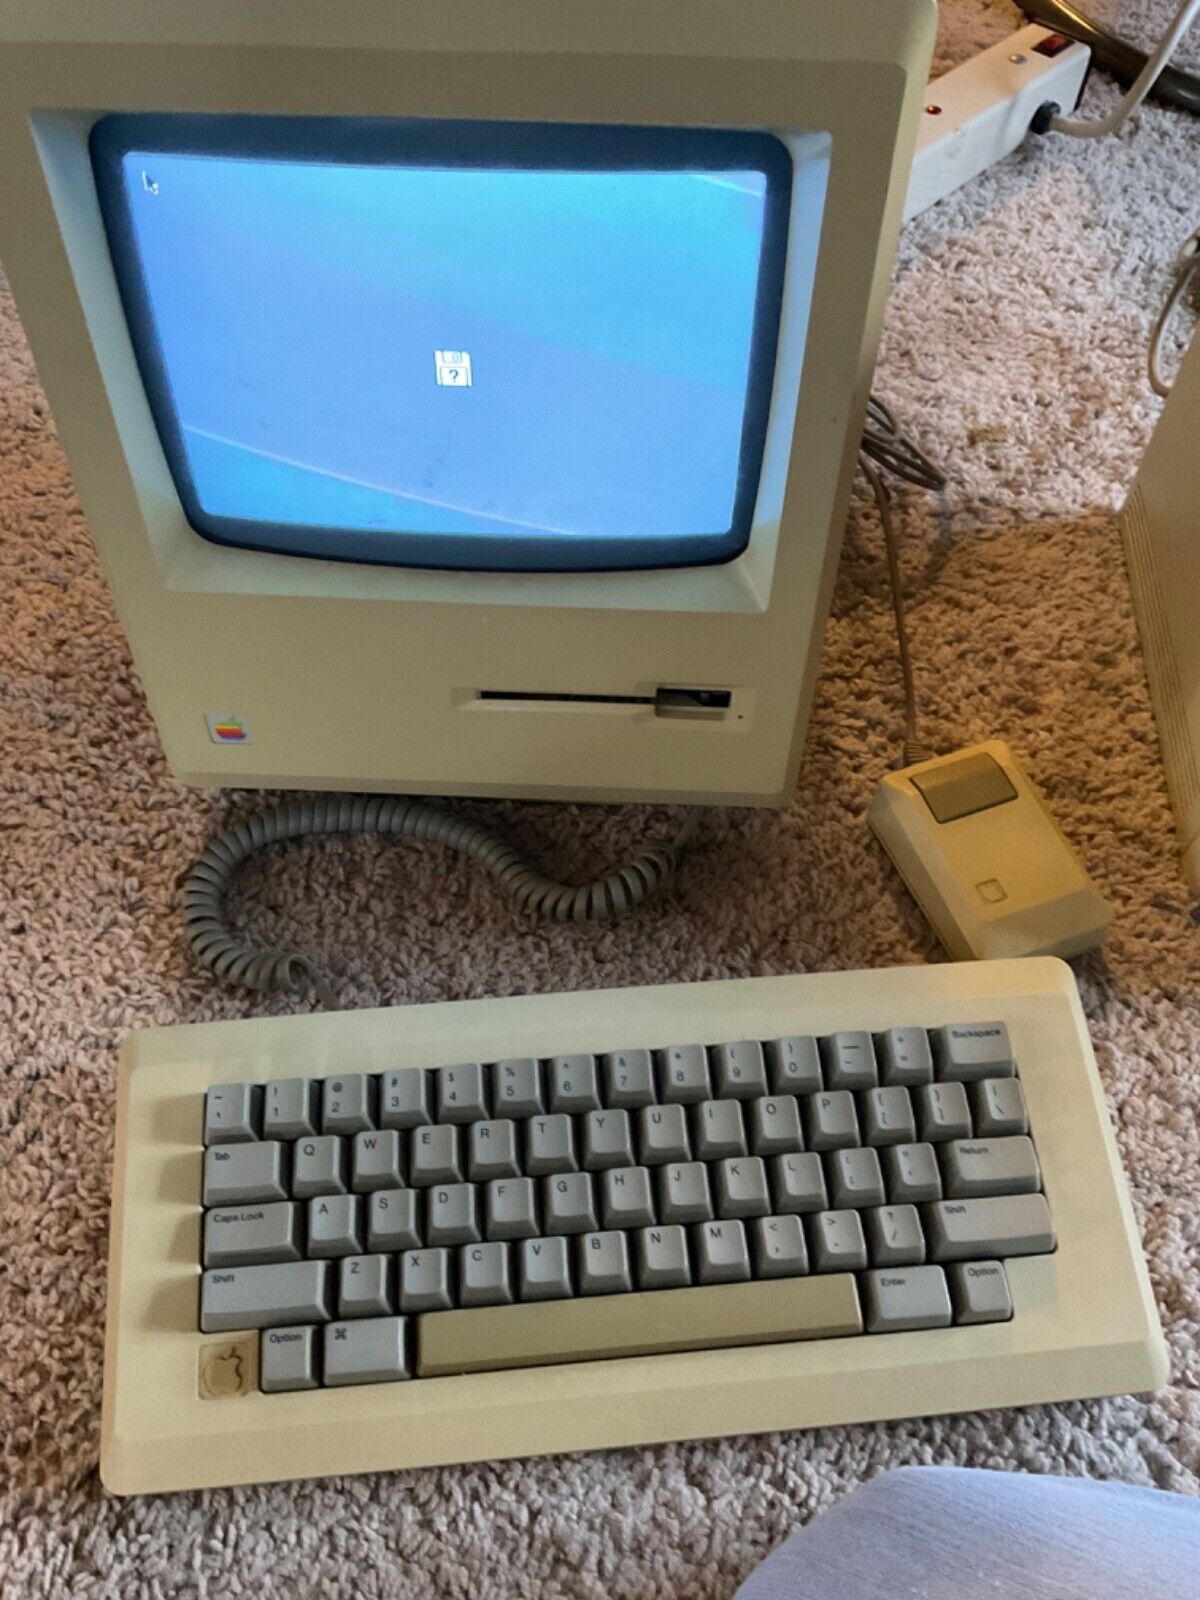 1984 Apple Macintosh Computer 512K model M001E W/ keyboard mouse power cord